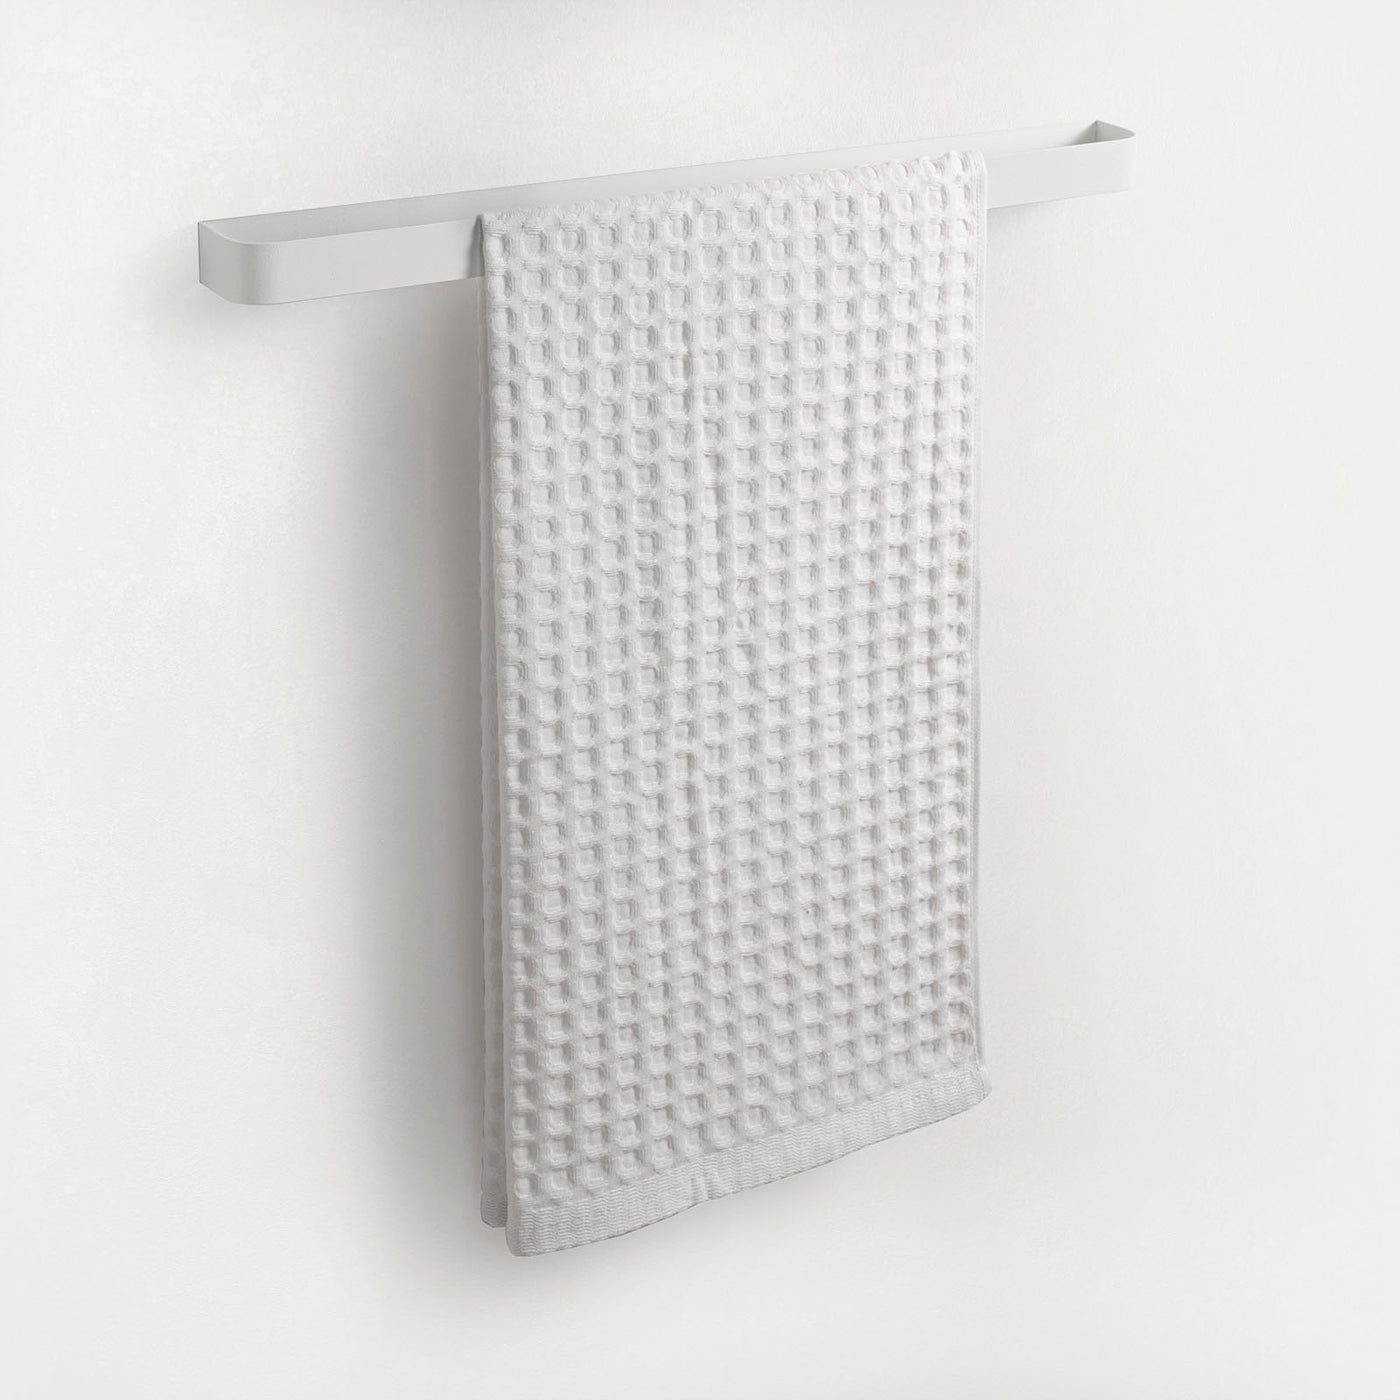 JIRO white wall towel holder